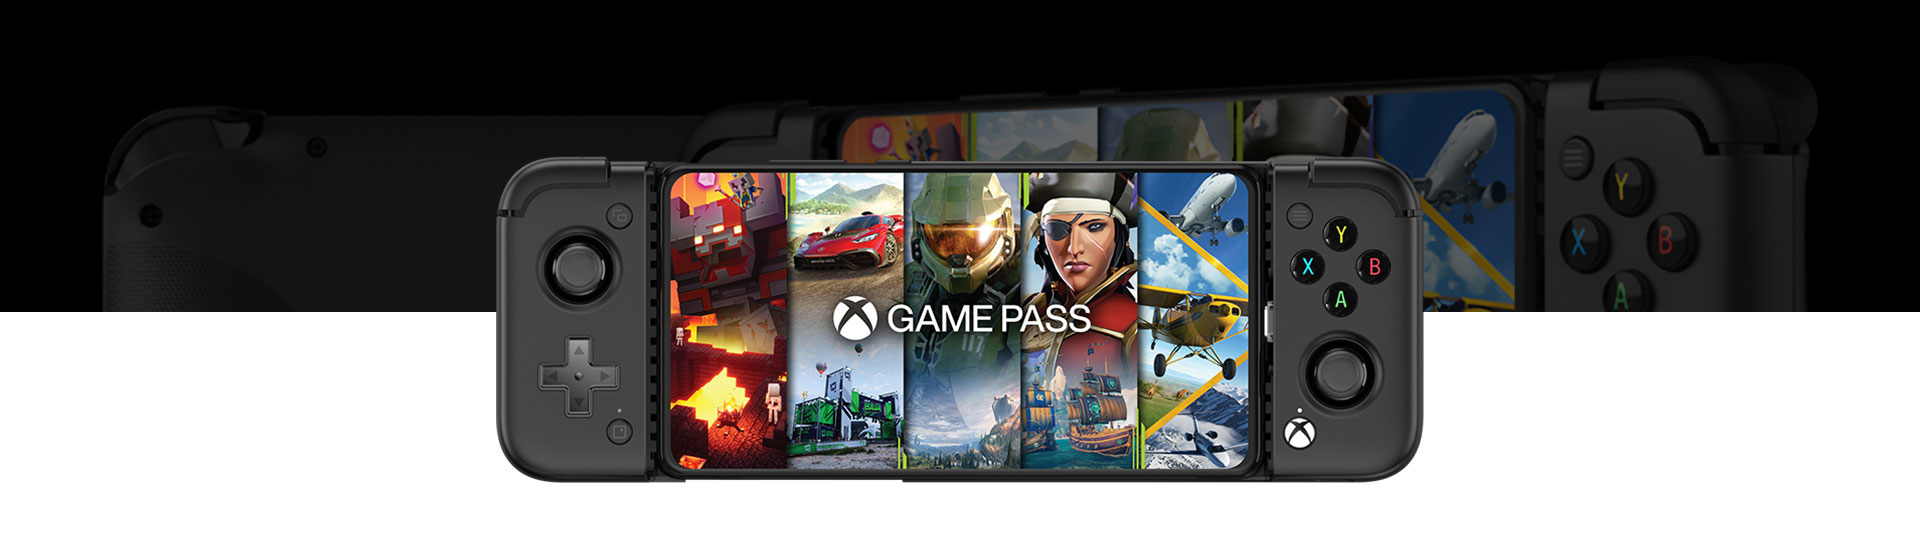 GameSir X2 Pro 行動遊戲控制器的正面圖，其中顯示填滿的 Game Pass 畫面